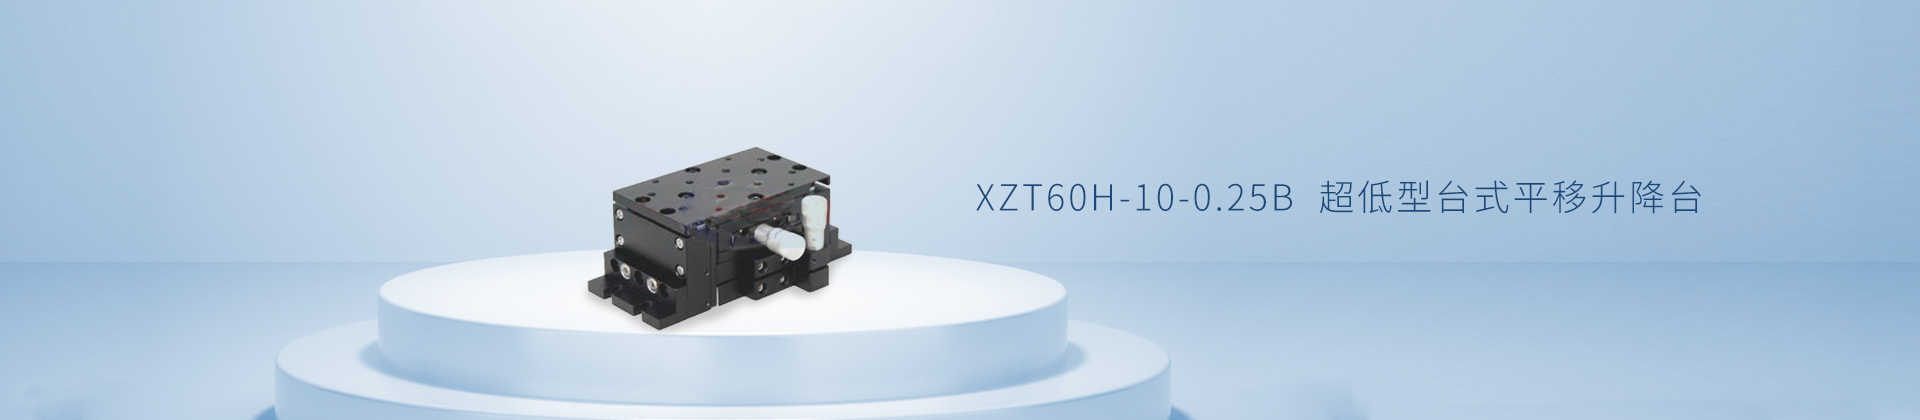 XZT60H-10-0.25B  超低型台式平移升降台